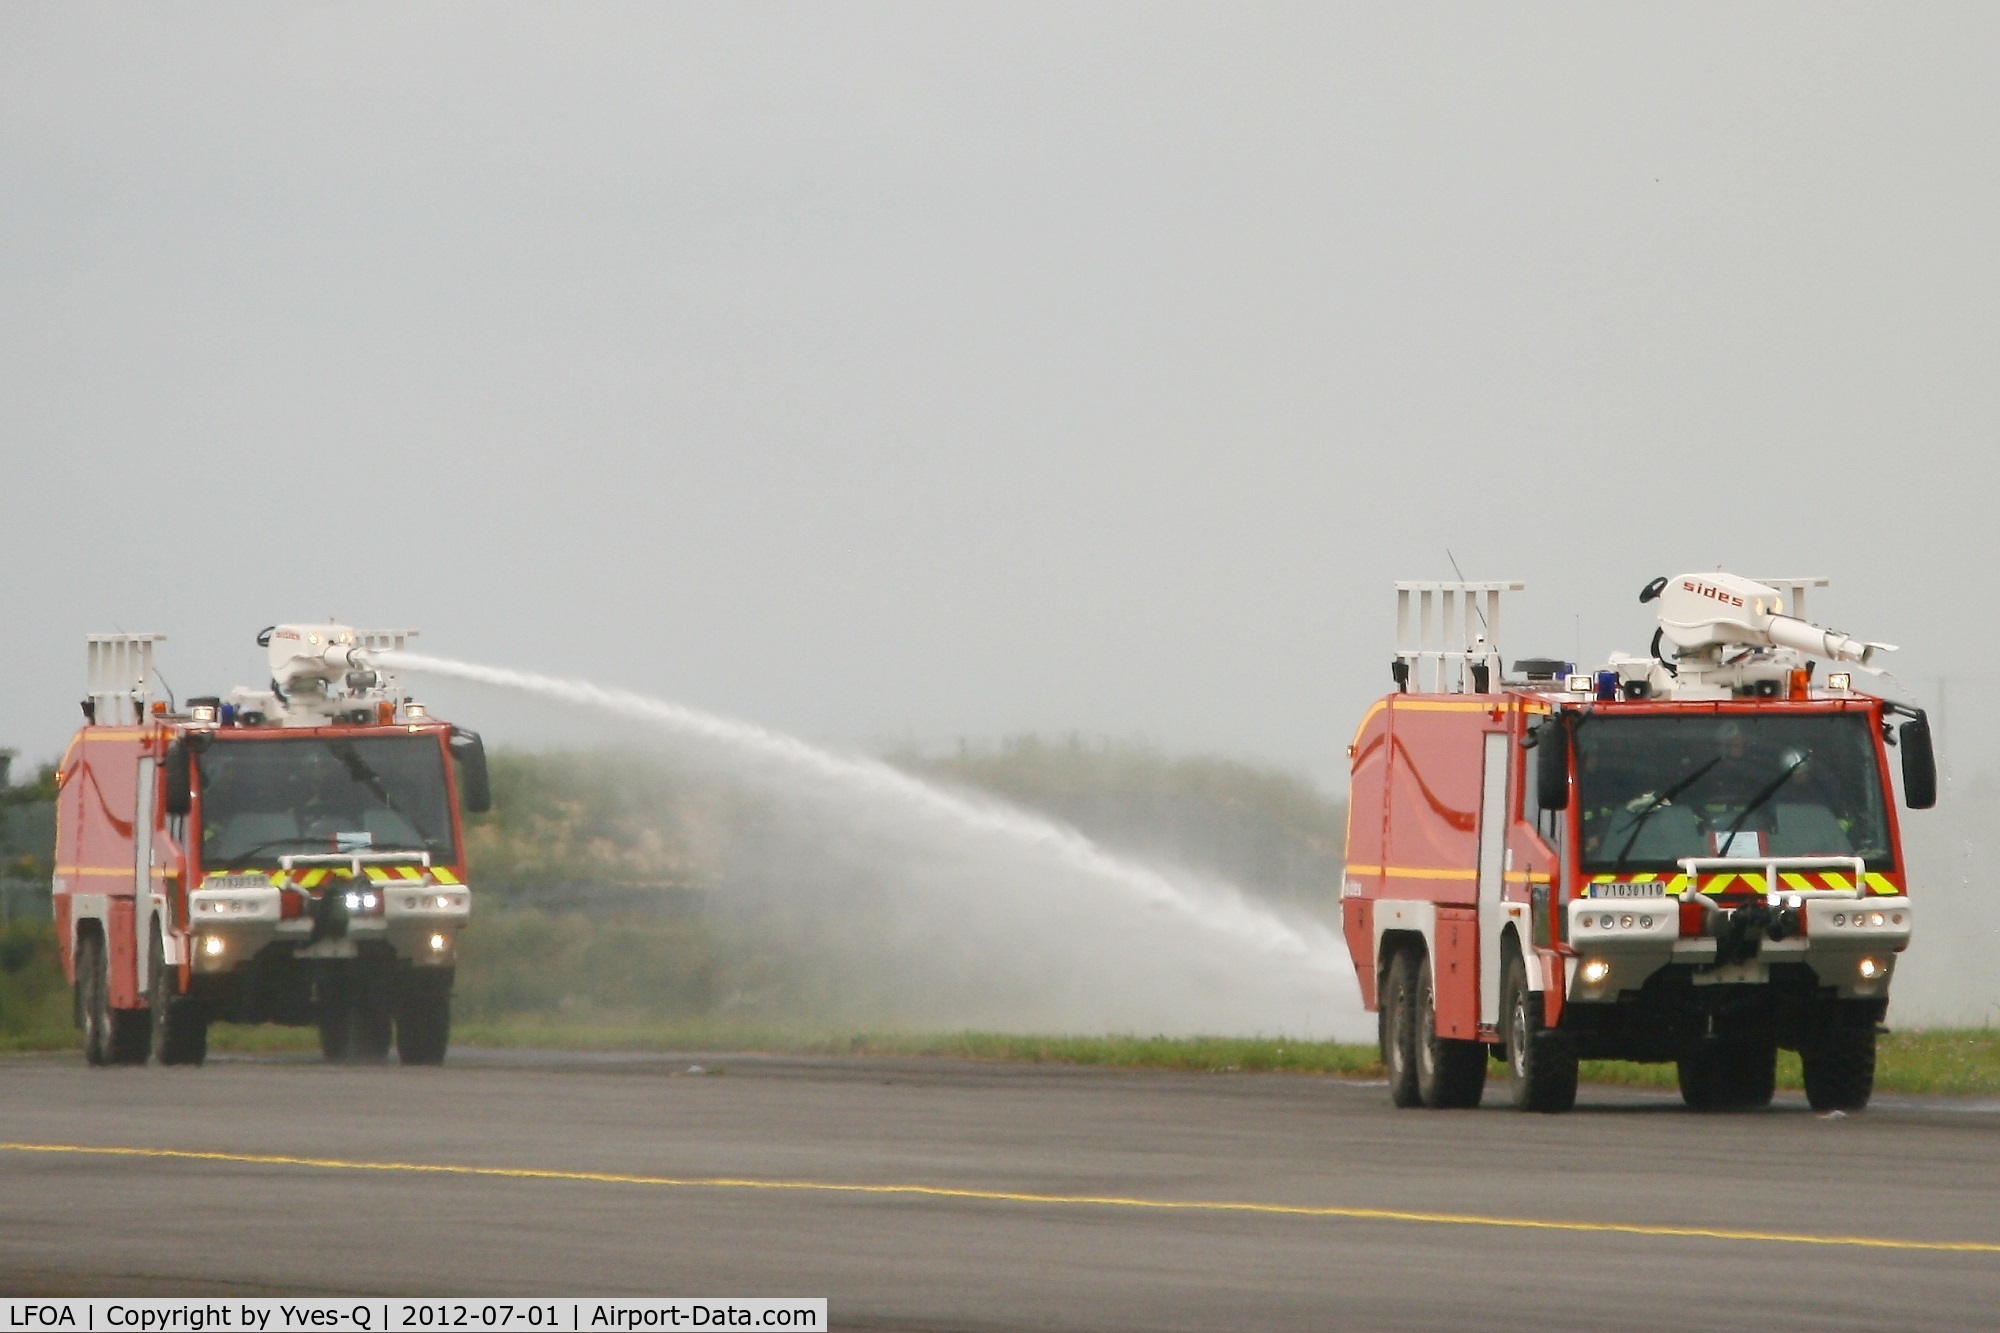 LFOA Airport - Fire Trucks Display, Avord Air Base (LFOA)